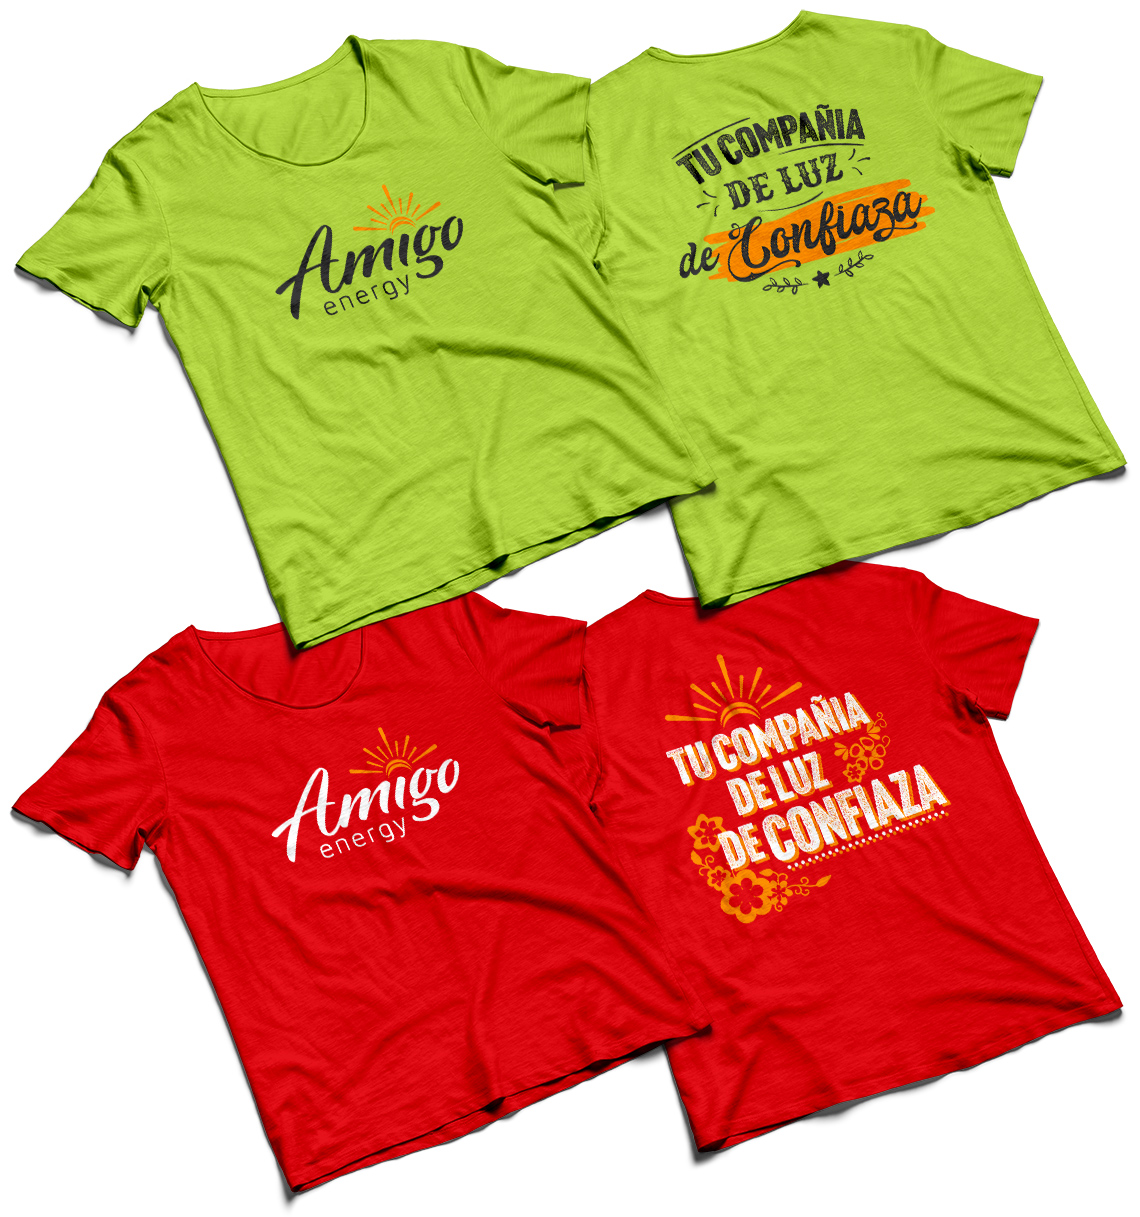 amigo tshirt design